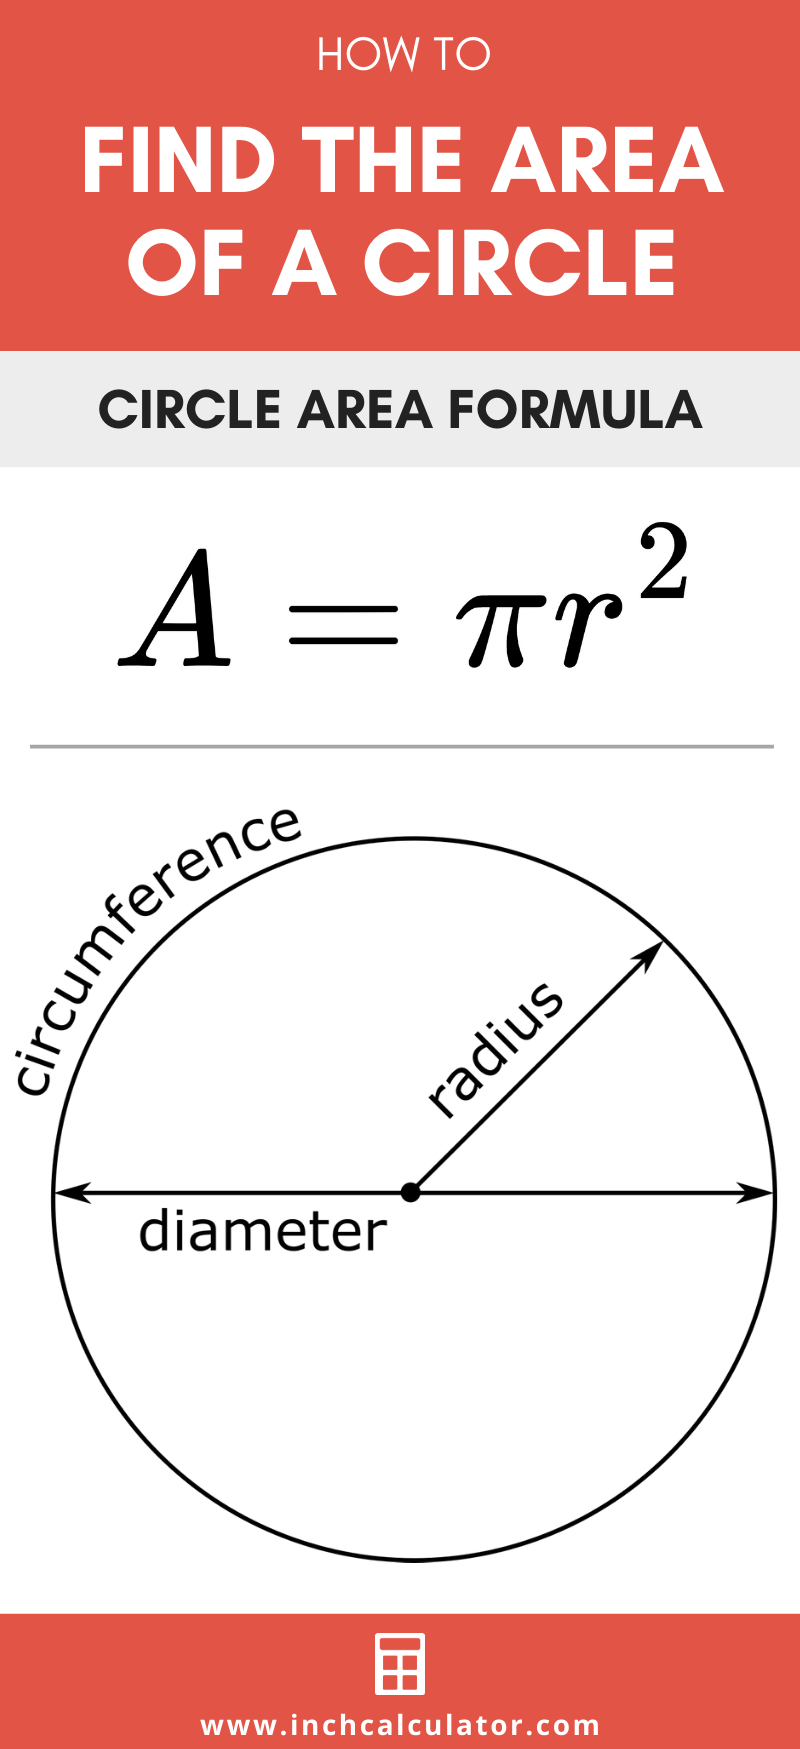 Share area of a circle calculator